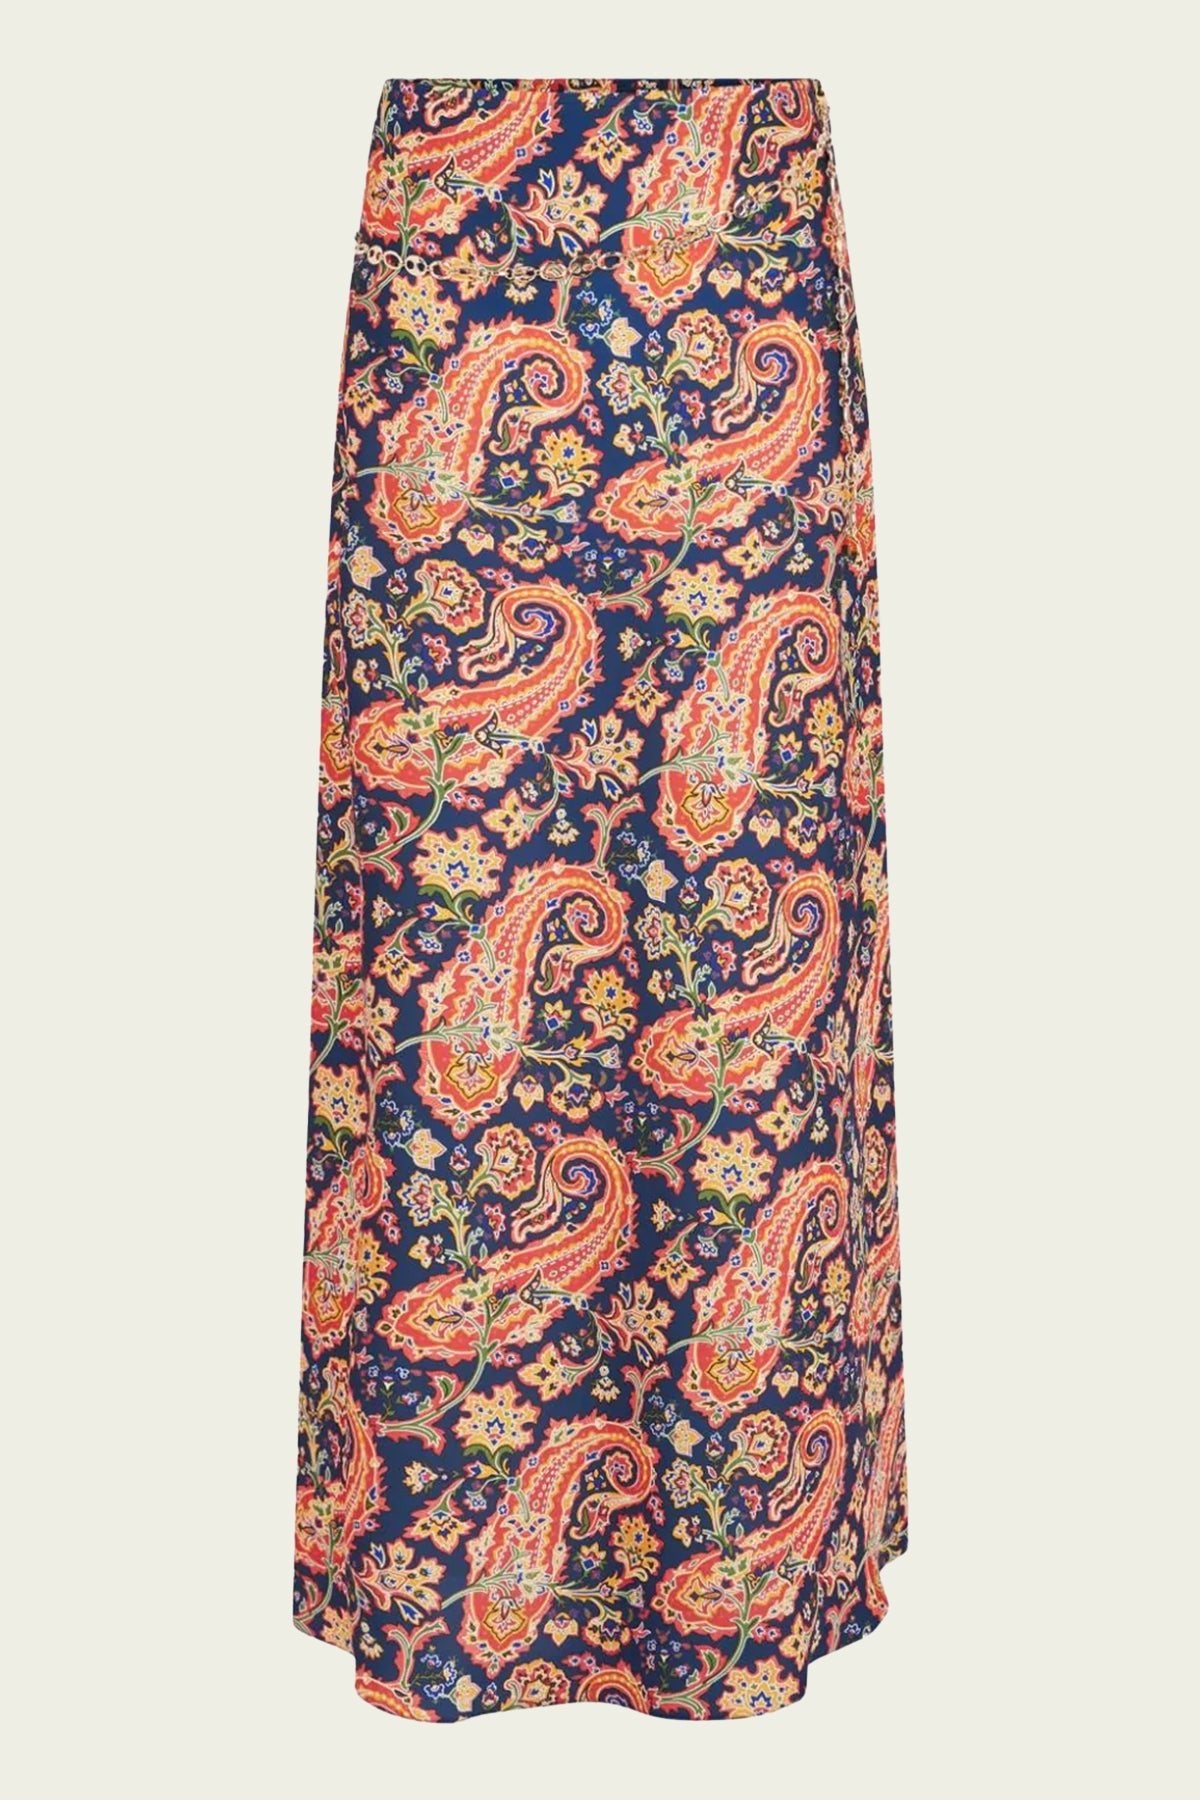 Paisley - Print Maxi Skirt in Cachemire Navy - shop - olivia.com